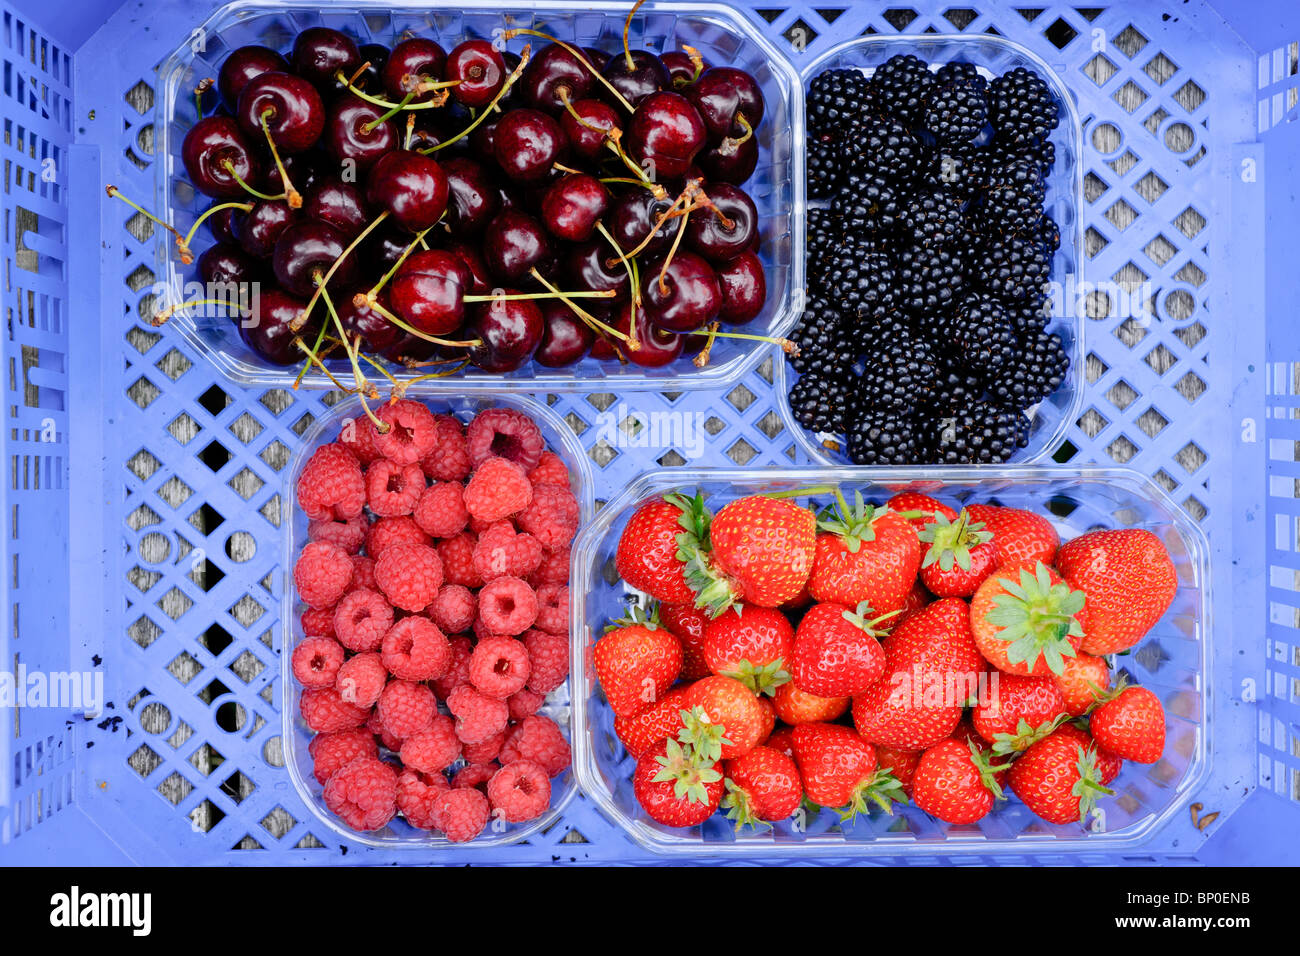 Punnet of fruit including Strawberries, Raspberries, Blackberries and Cherries in a blue box. Stock Photo